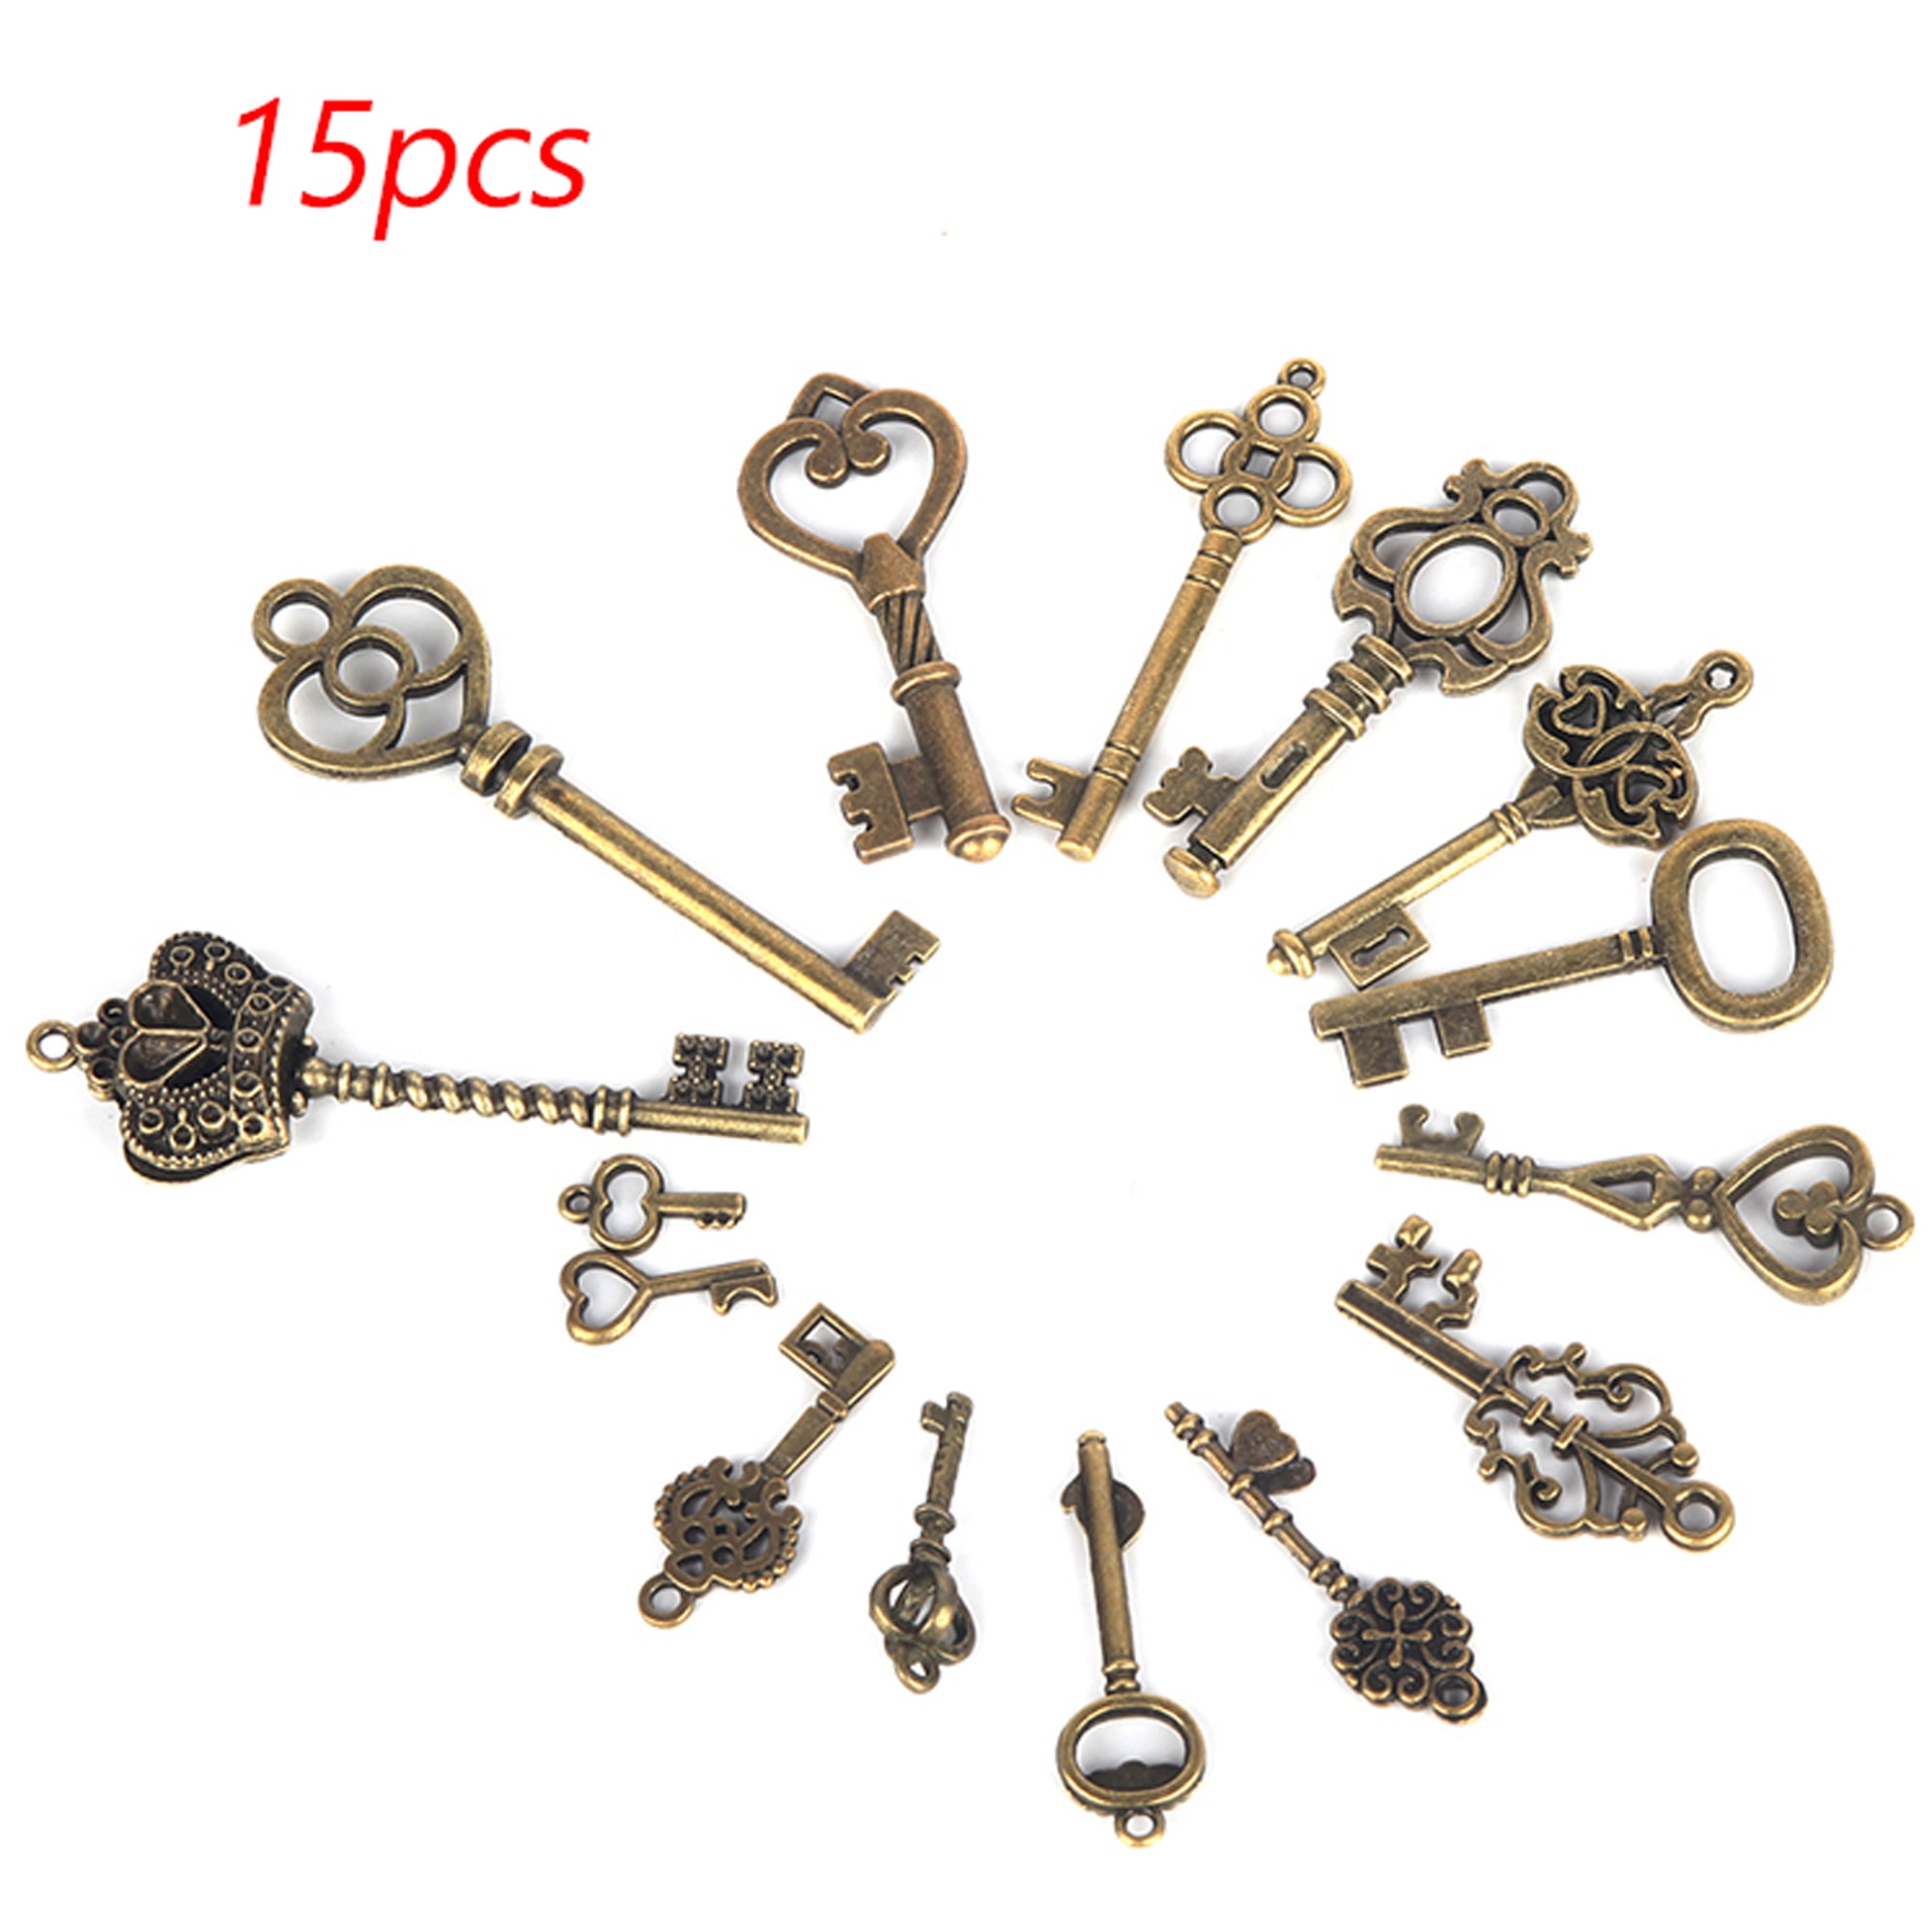 8 x Royal Skeleton Key Antique Old look Vintage Key charm jewelry findings craft 